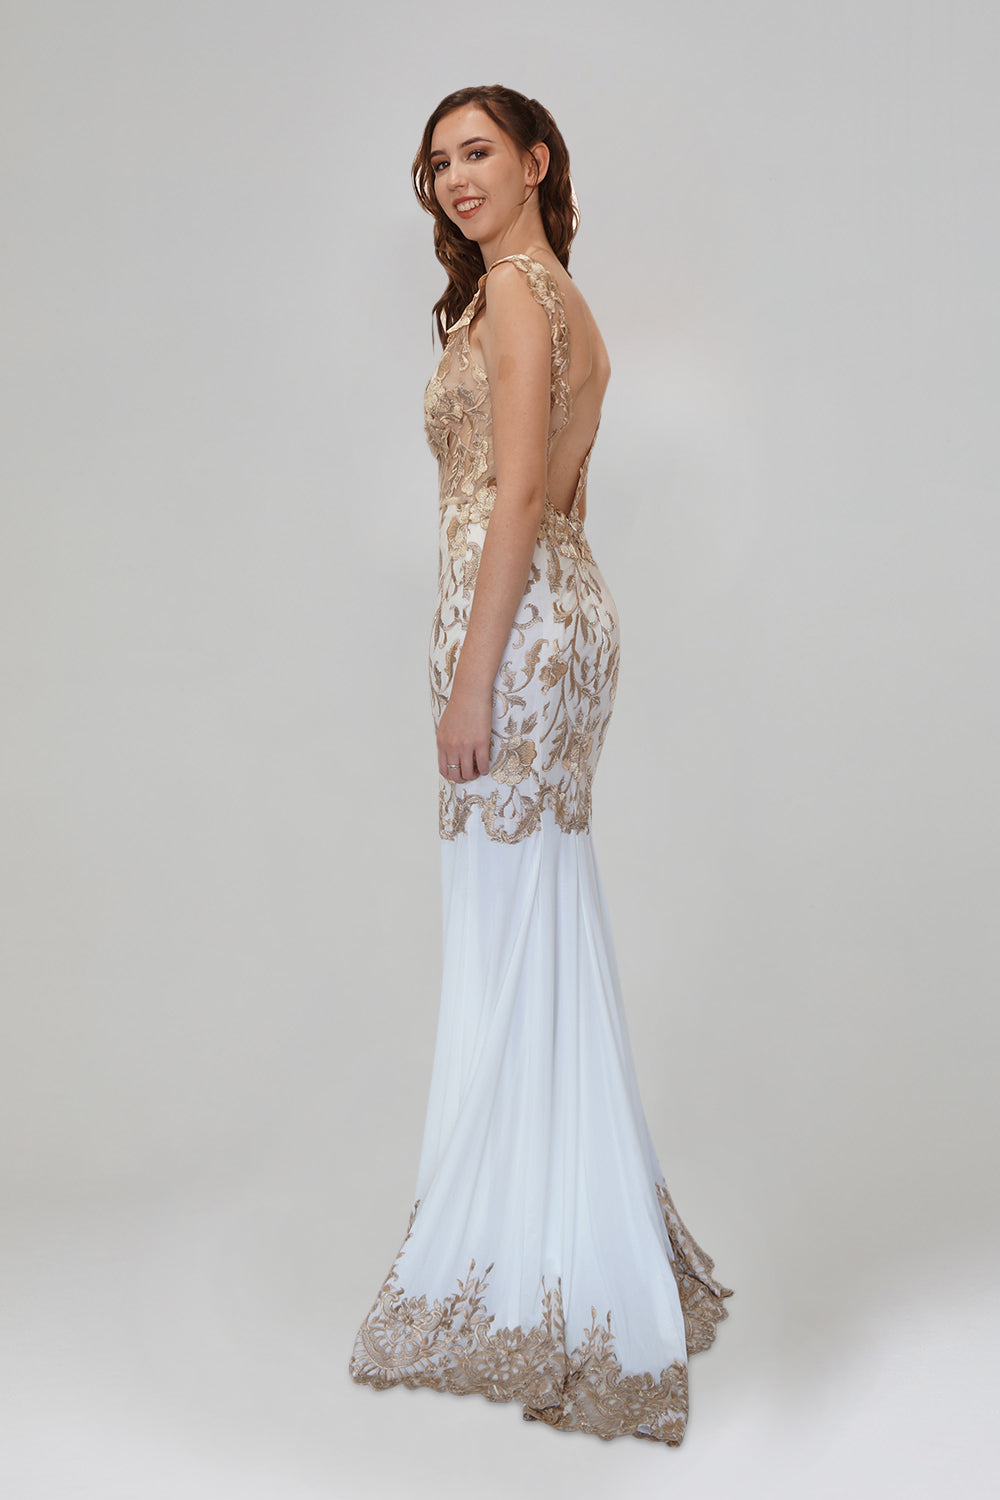 custom gold white bridesmaid dresses perth australia online envuous bridal & formal